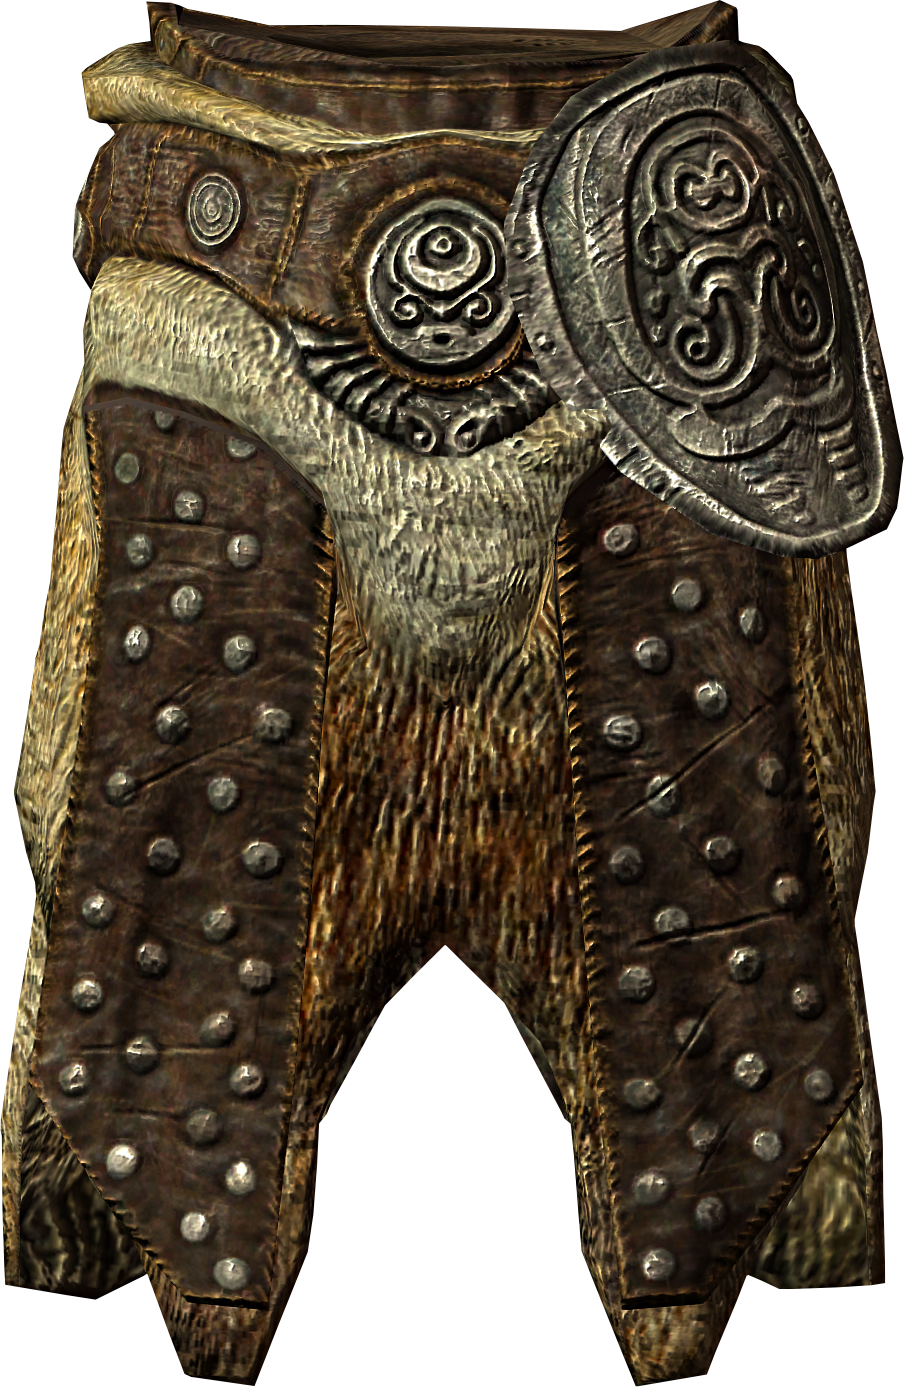 Studded Armor, Elder Scrolls